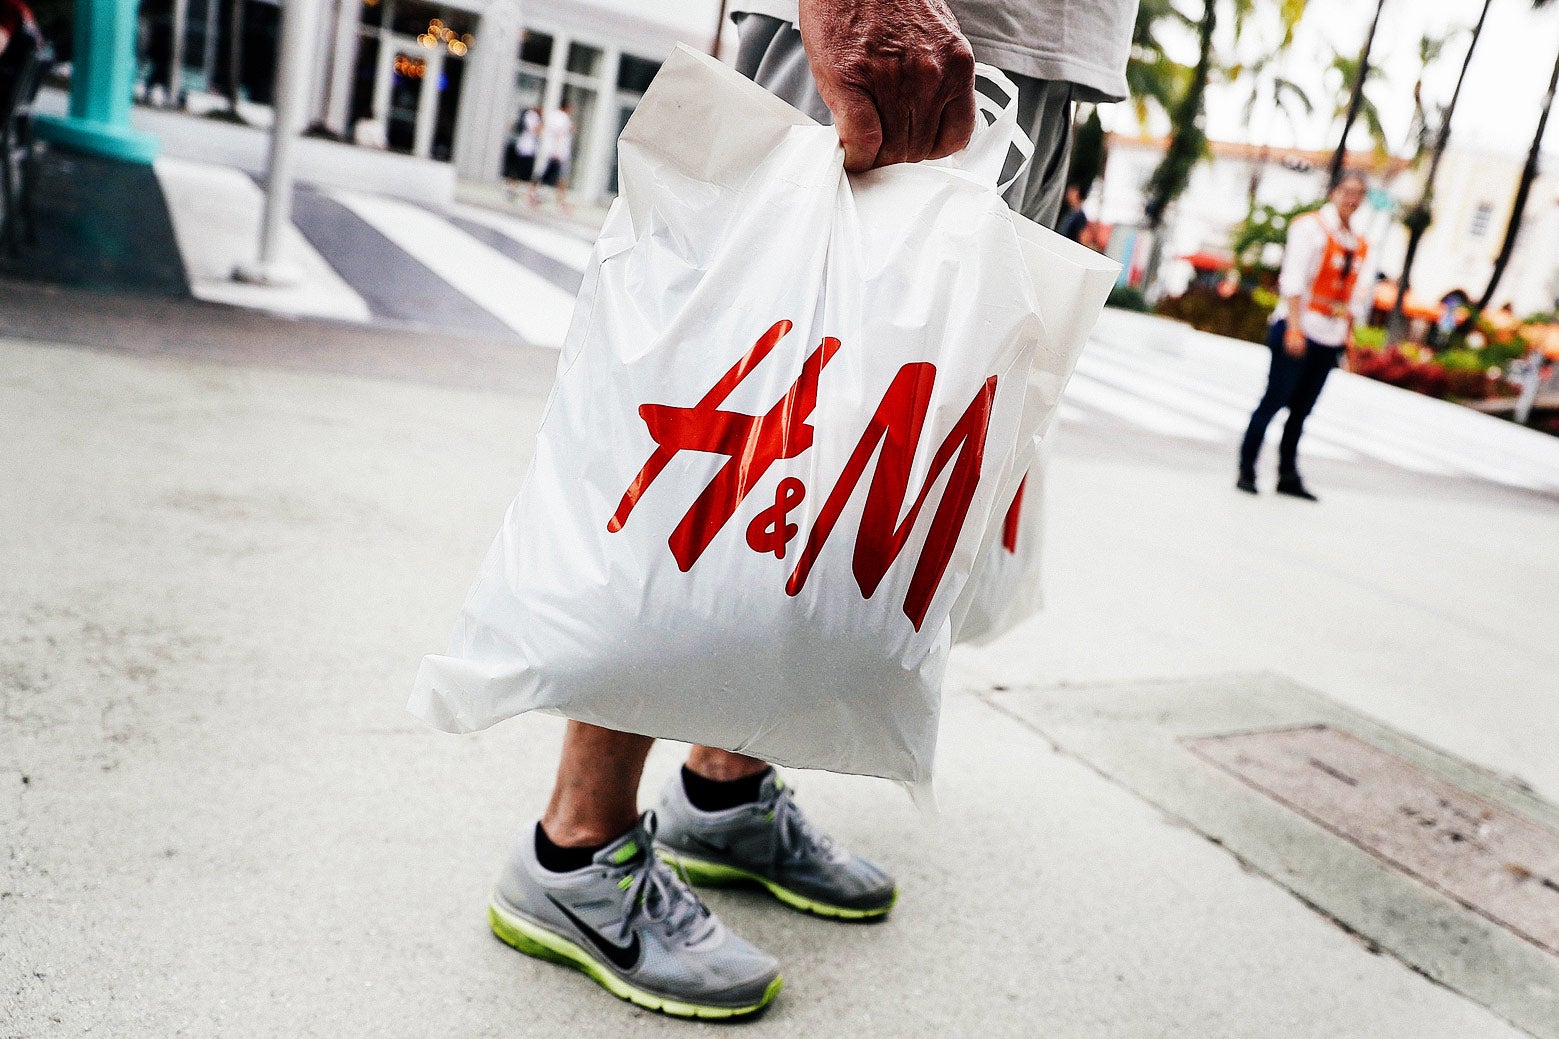 H&M Pivots to Big Data to Spot Next Big Fast-Fashion Trends - WSJ